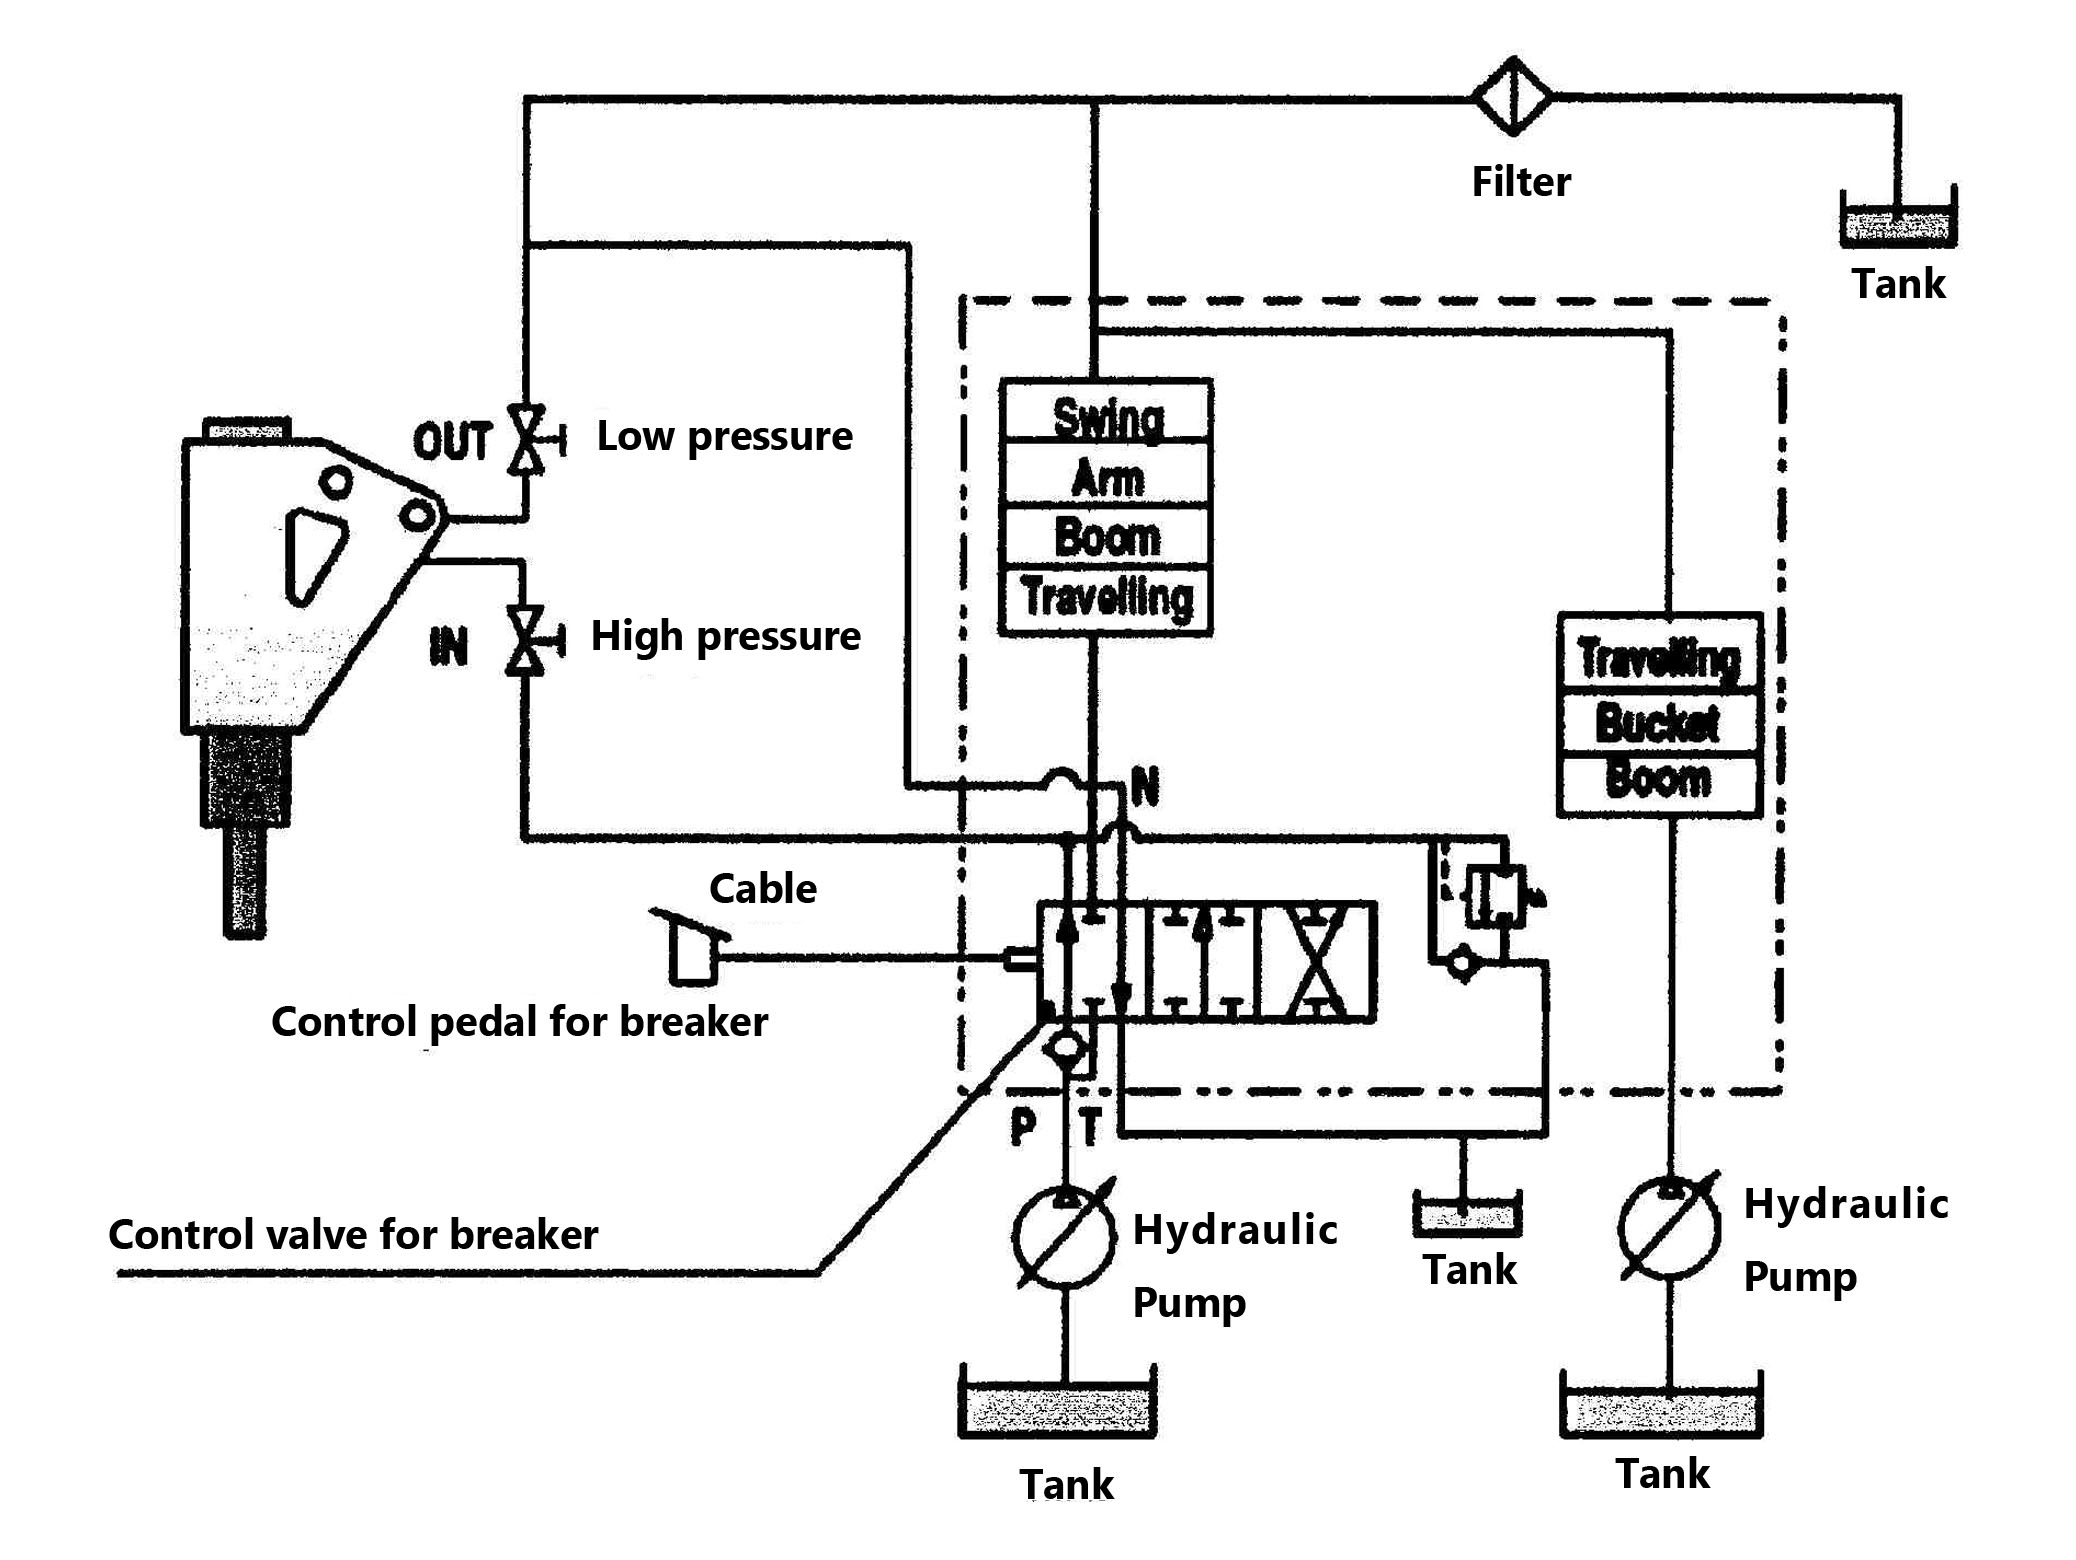 nstallation&Operation of AXB Hydraulic breakers